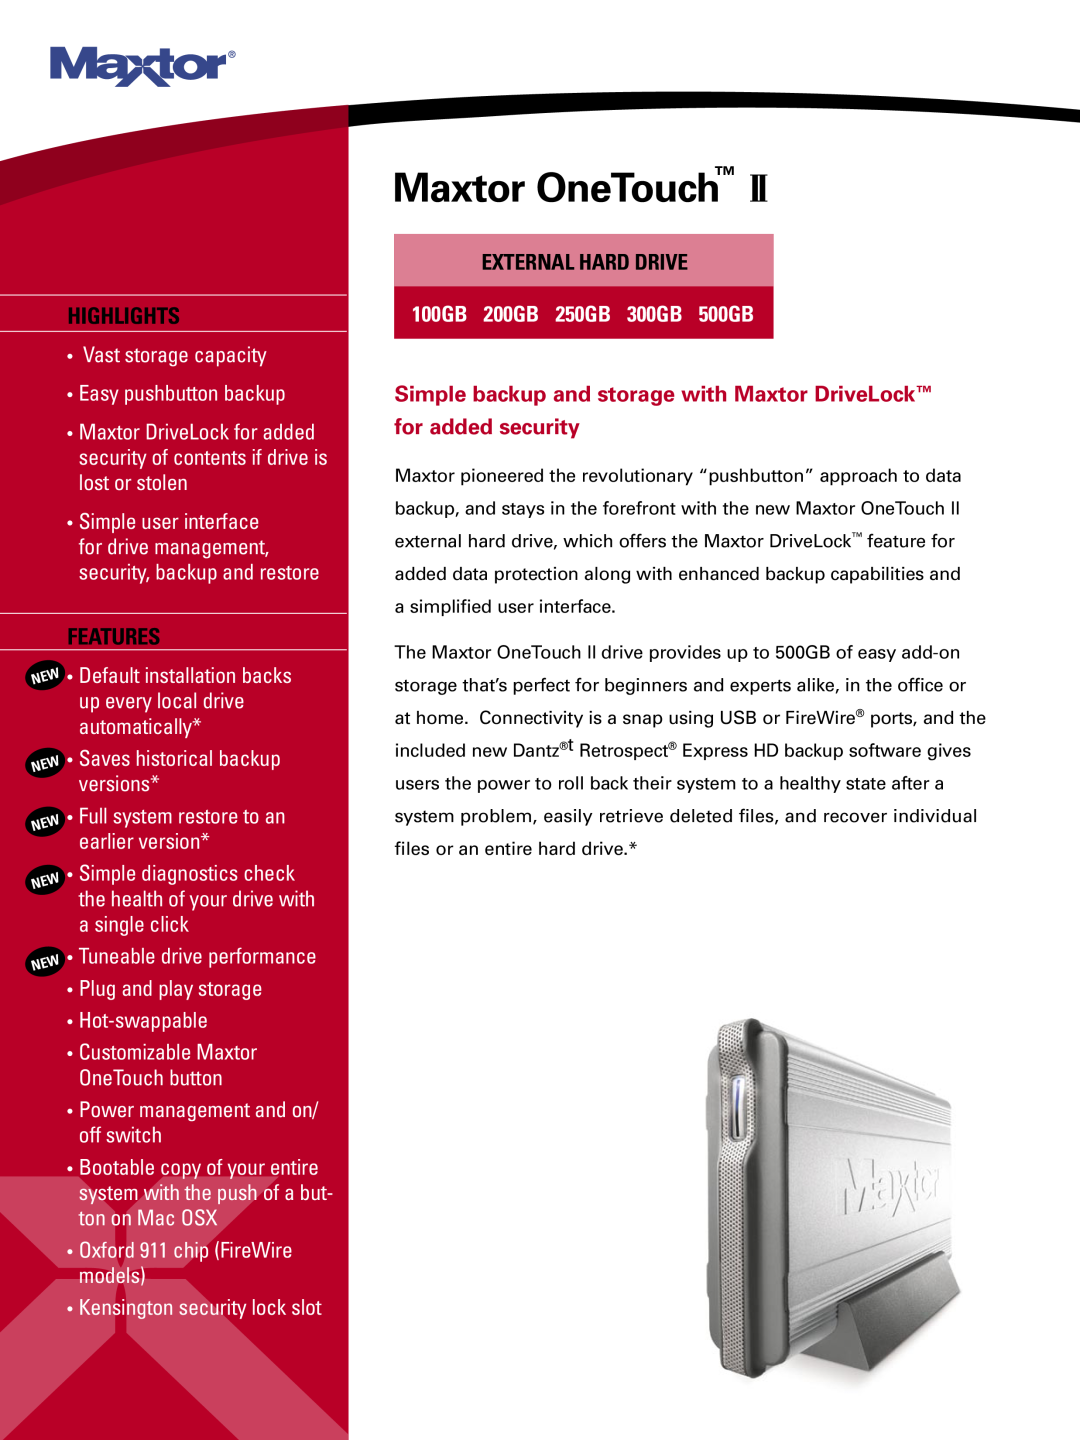 Maxtor E01E100, E01H300 manual External Hard Drive, Maxtor OneTouch, Highlights, Features, 100GB 200GB 250GB 300GB 500GB 